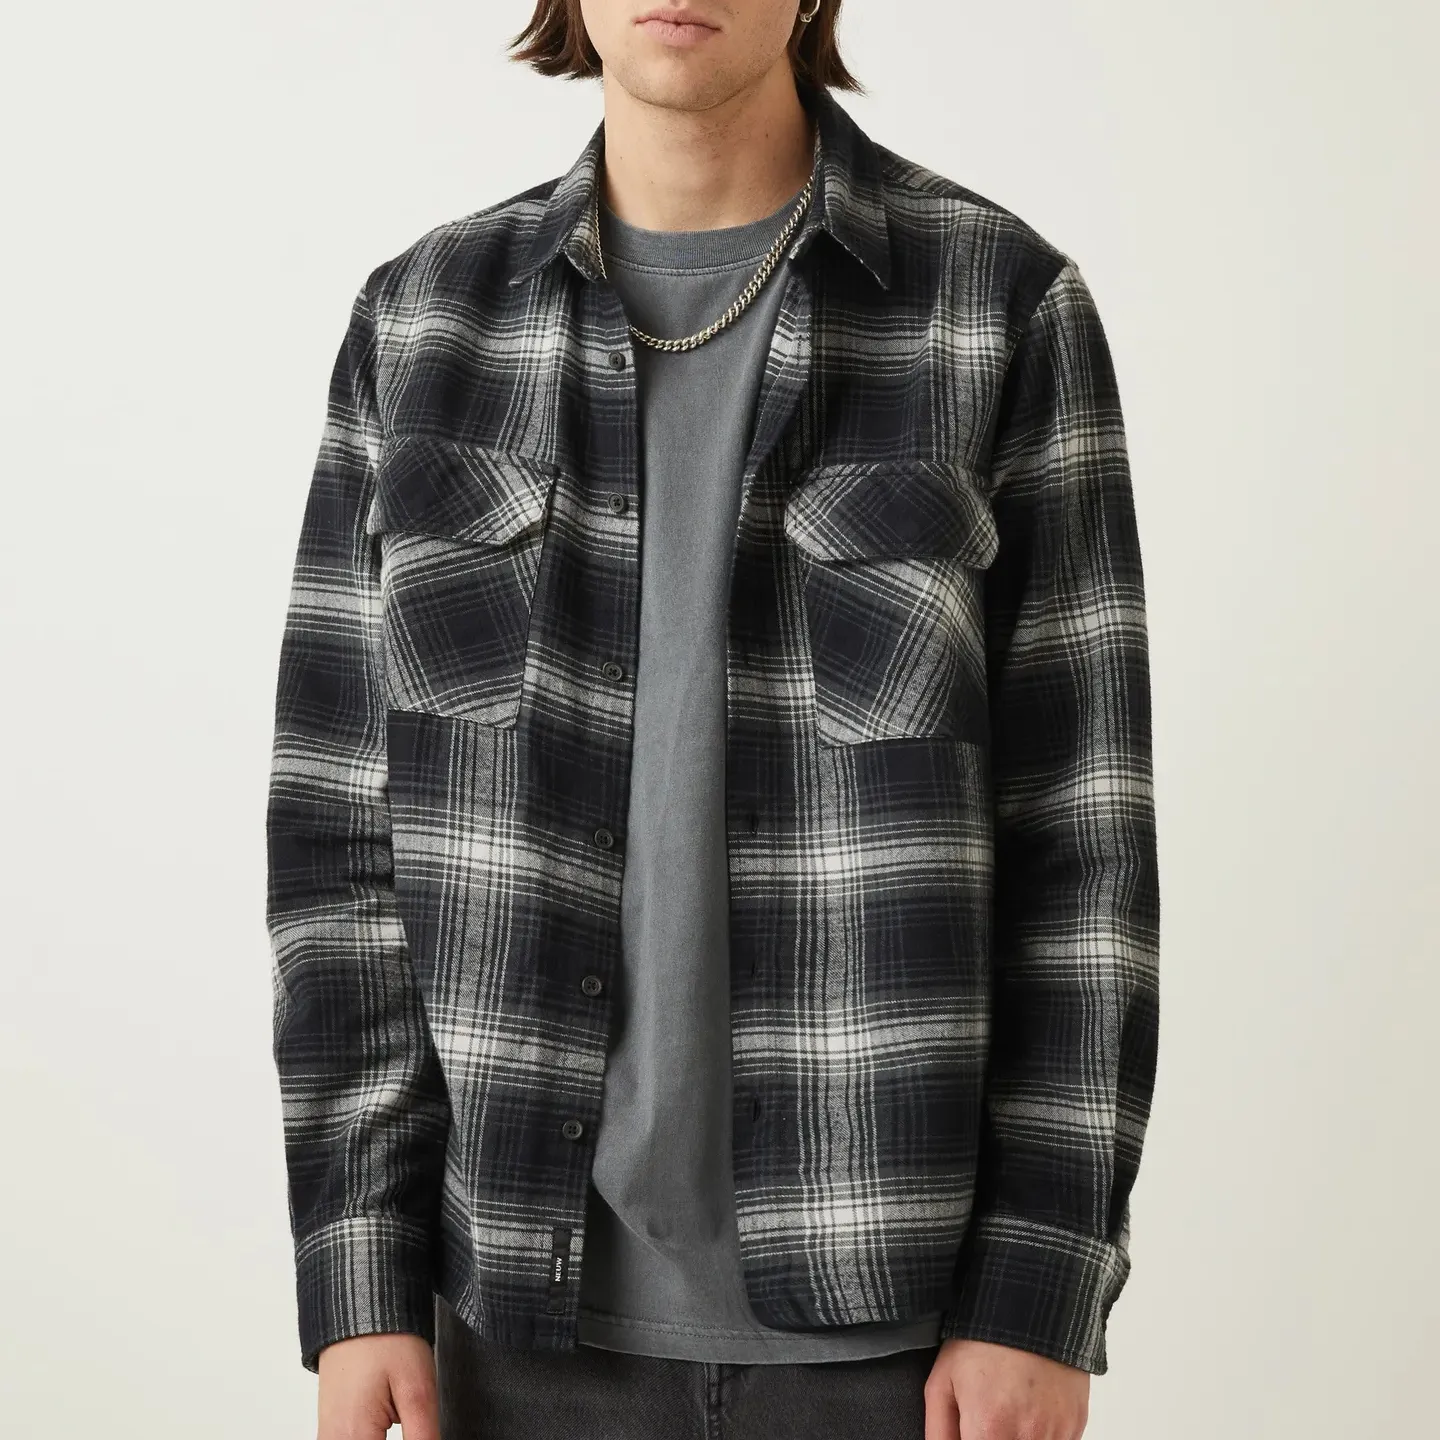 2022 Urban Großhandel Männer Regular Fit Shirt Gebürstete Baumwolle Twill Workout Wear Flanell Shirts Jacke